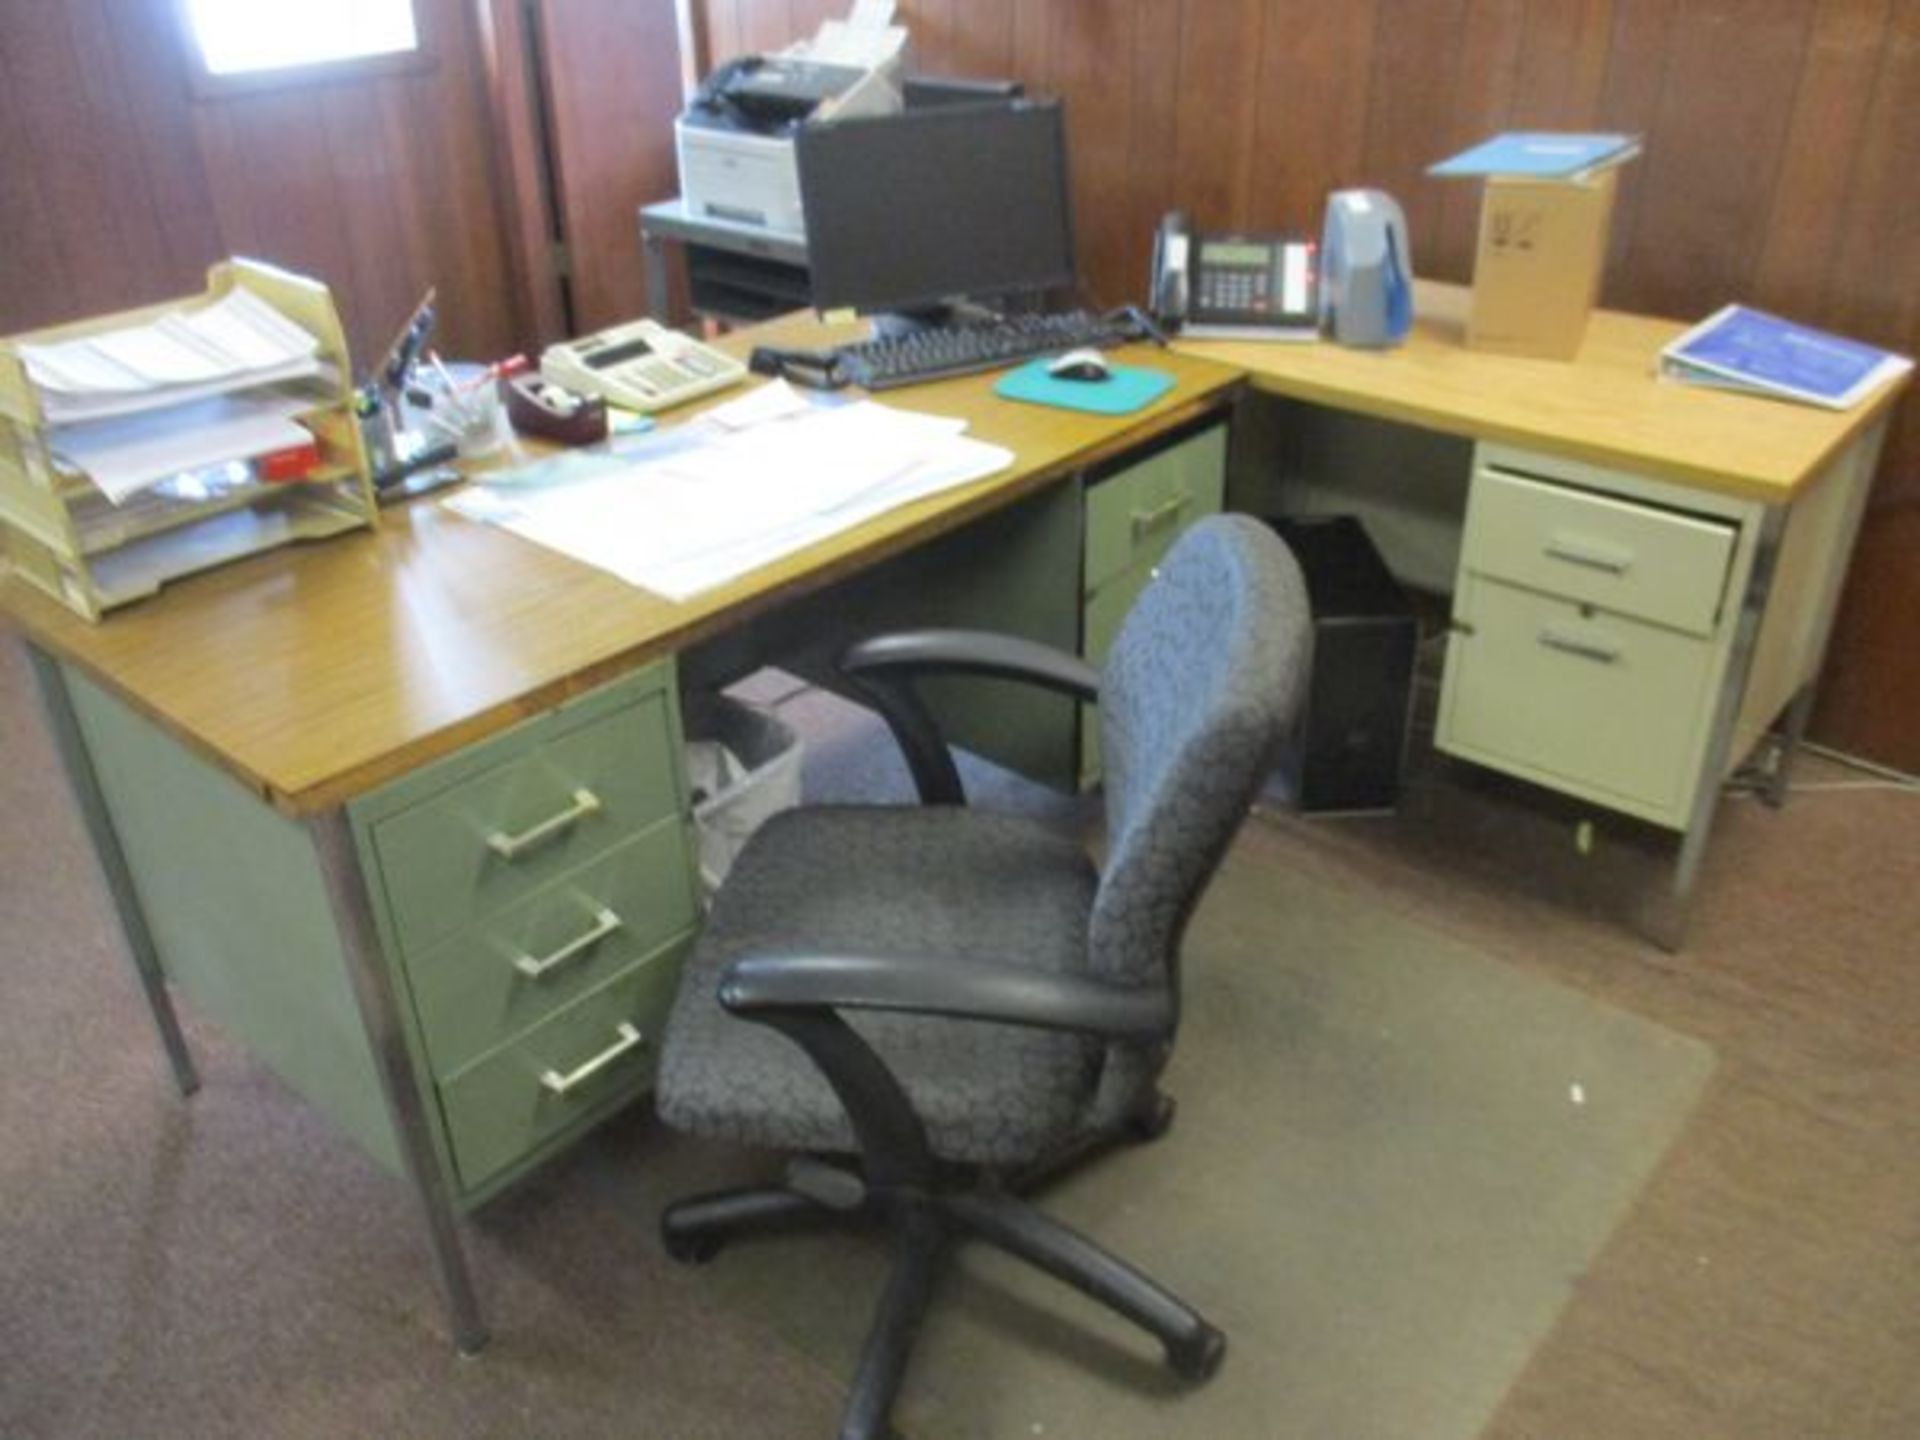 LOT (5) Asst. Desks, Chairs, Copier, Etc. on Second Floor - Image 2 of 3